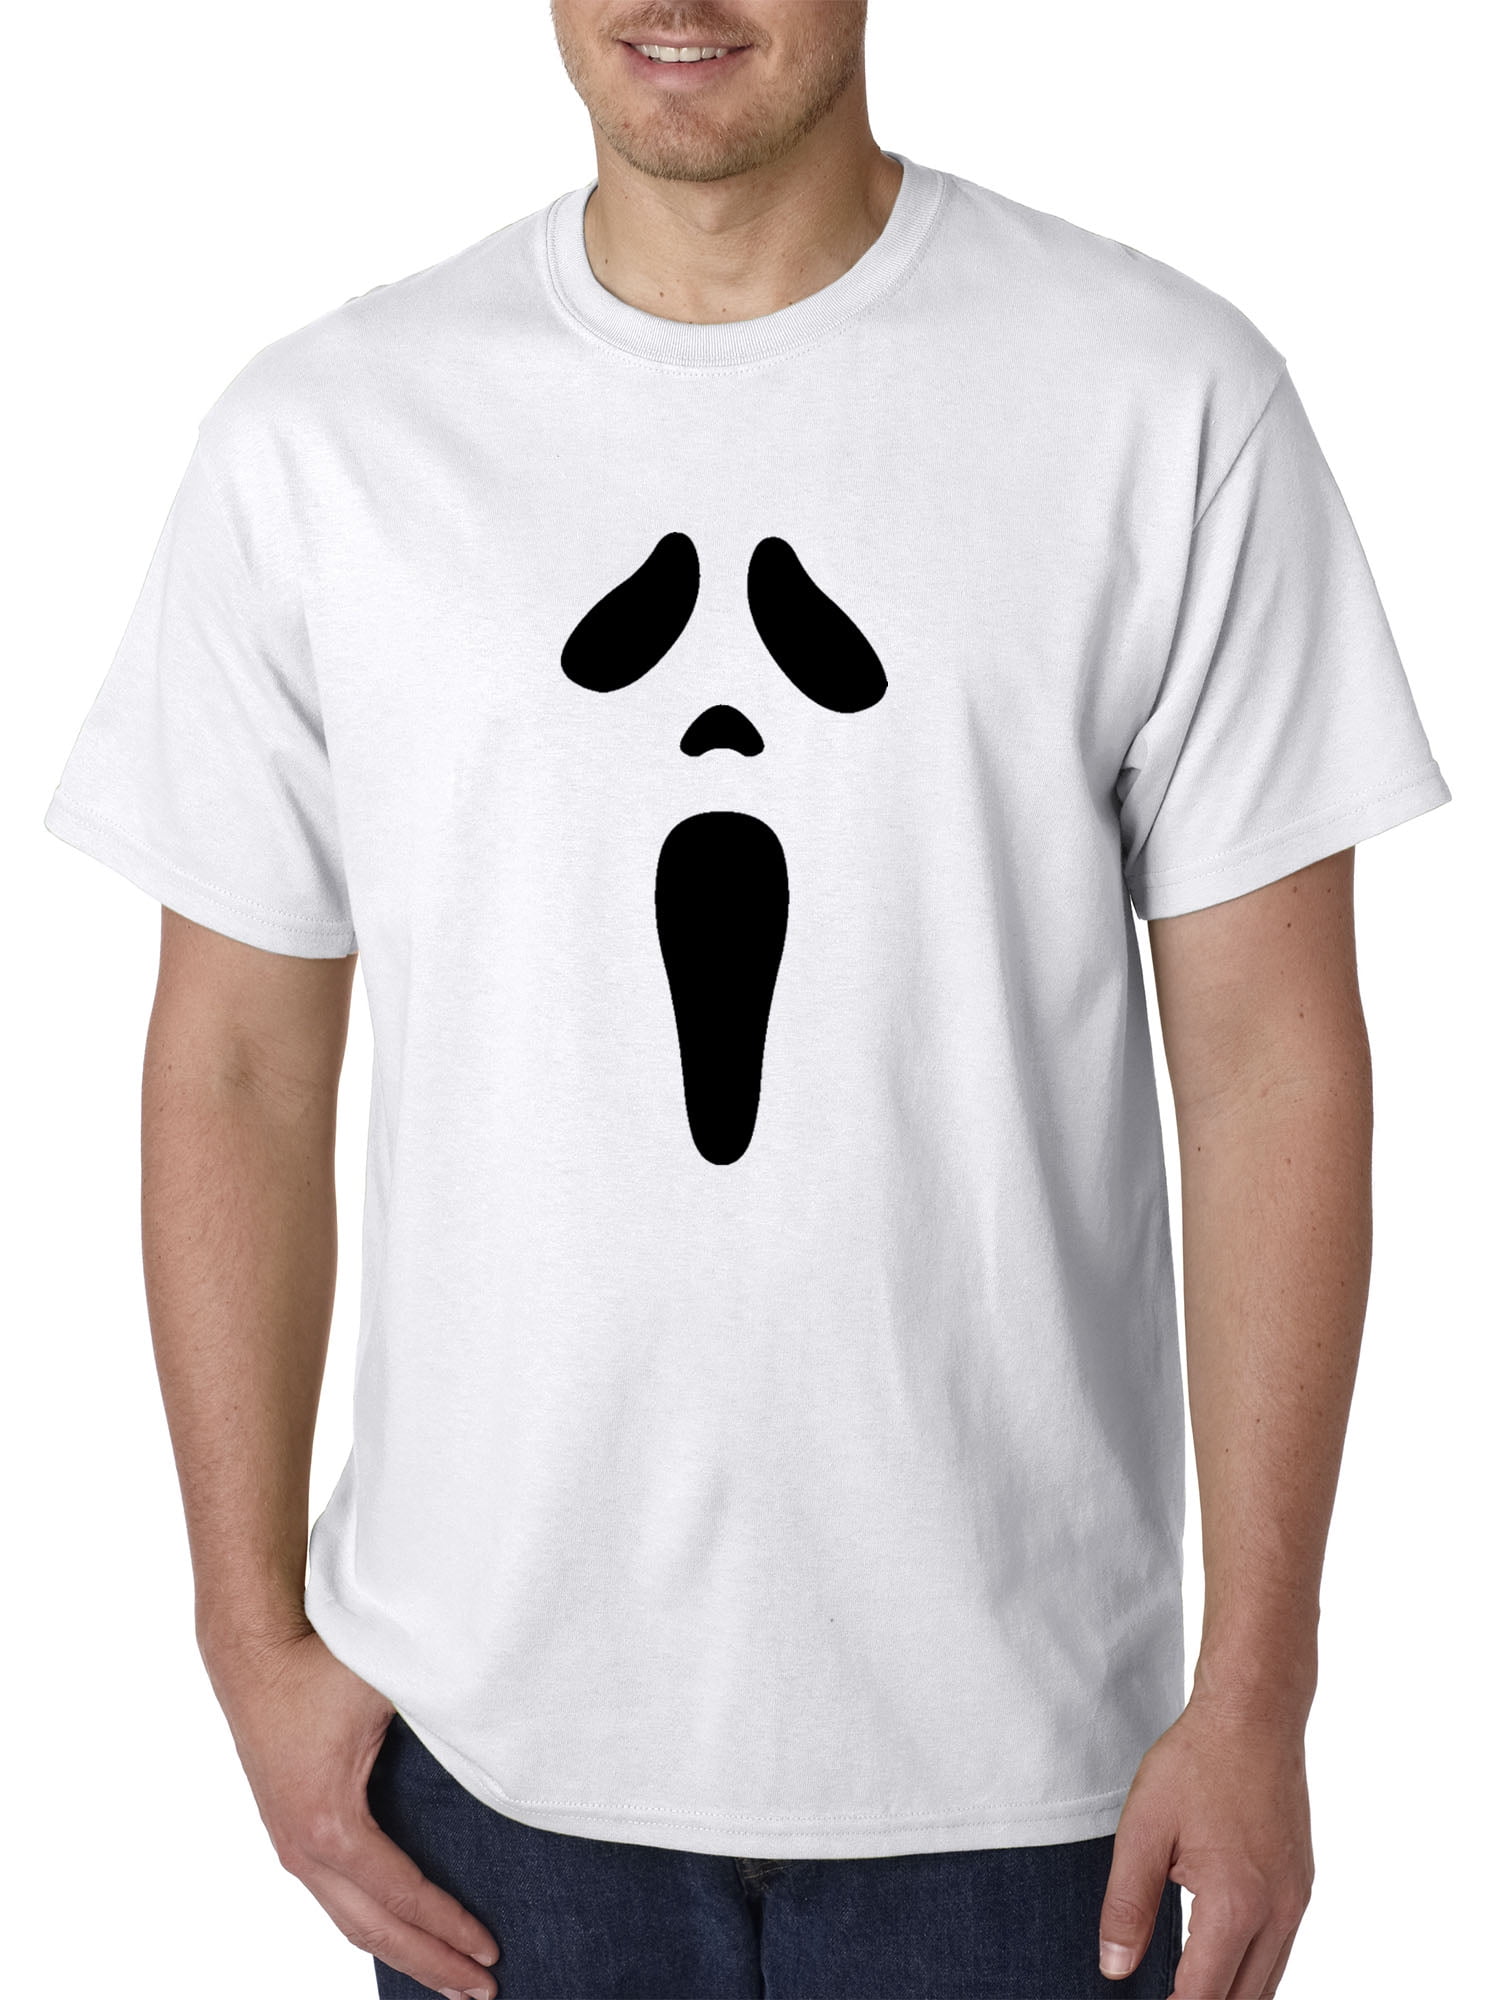 Spooky Season  Halloween Ghost  White Ghost  Trick or Treat  Haunted  Unisex Tees  Short Sleeve T-Shirt